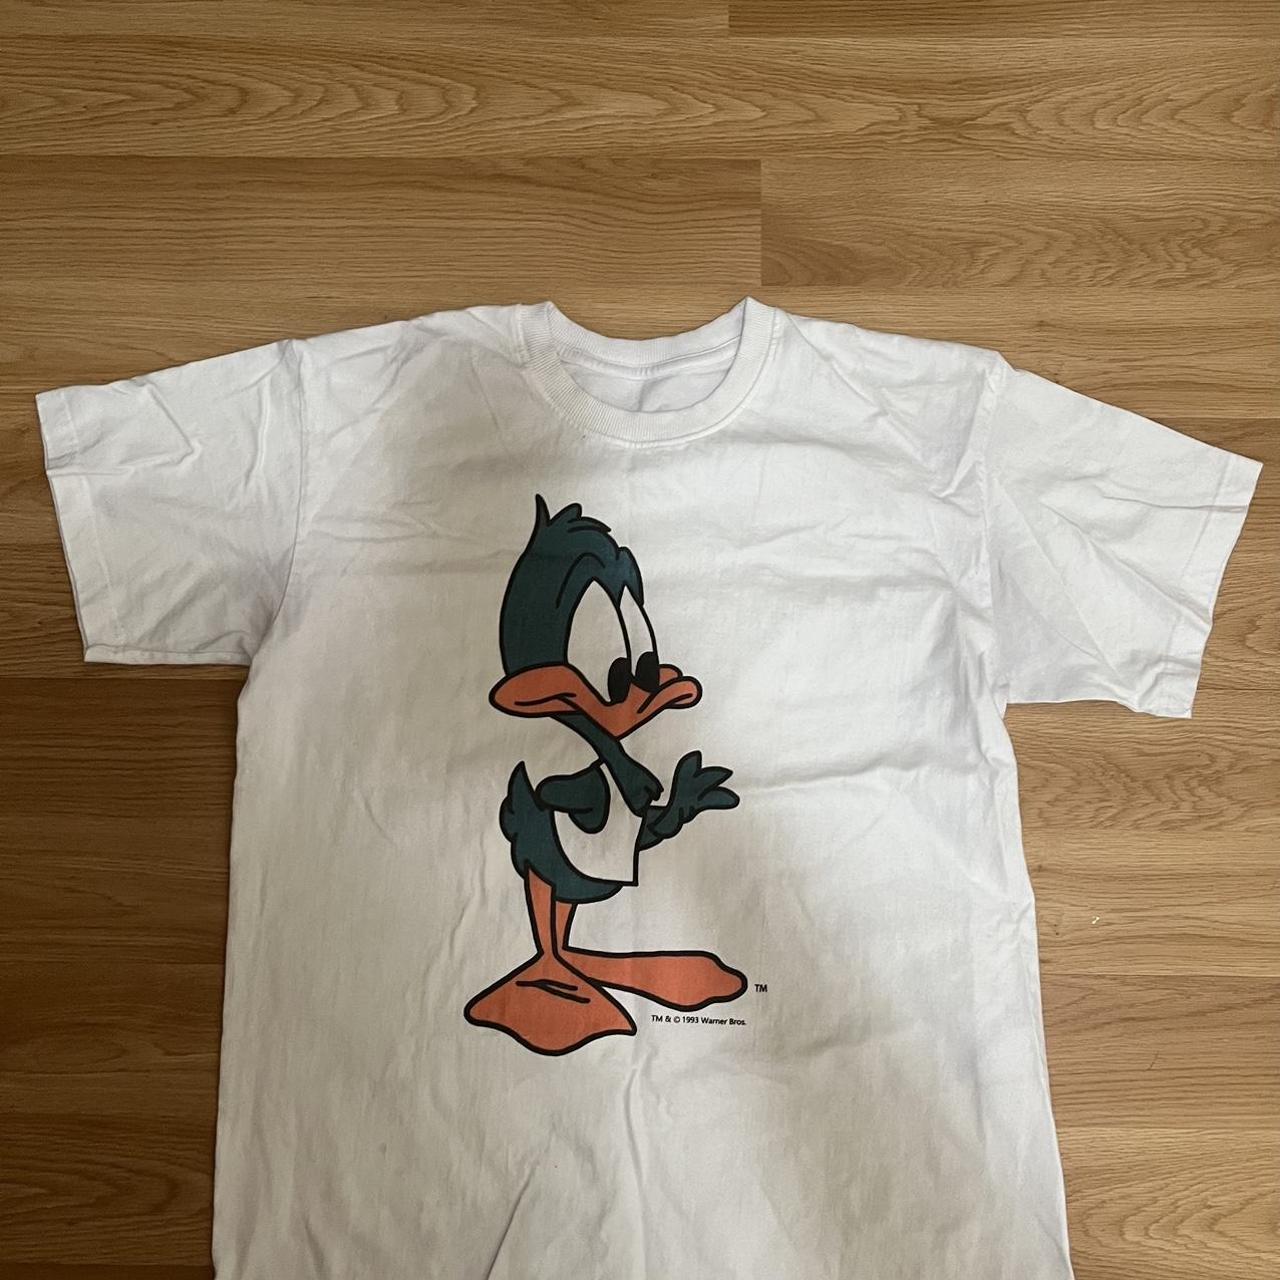 Vintage Plucky Duck Shirt Size L No flaws Depop... - Depop